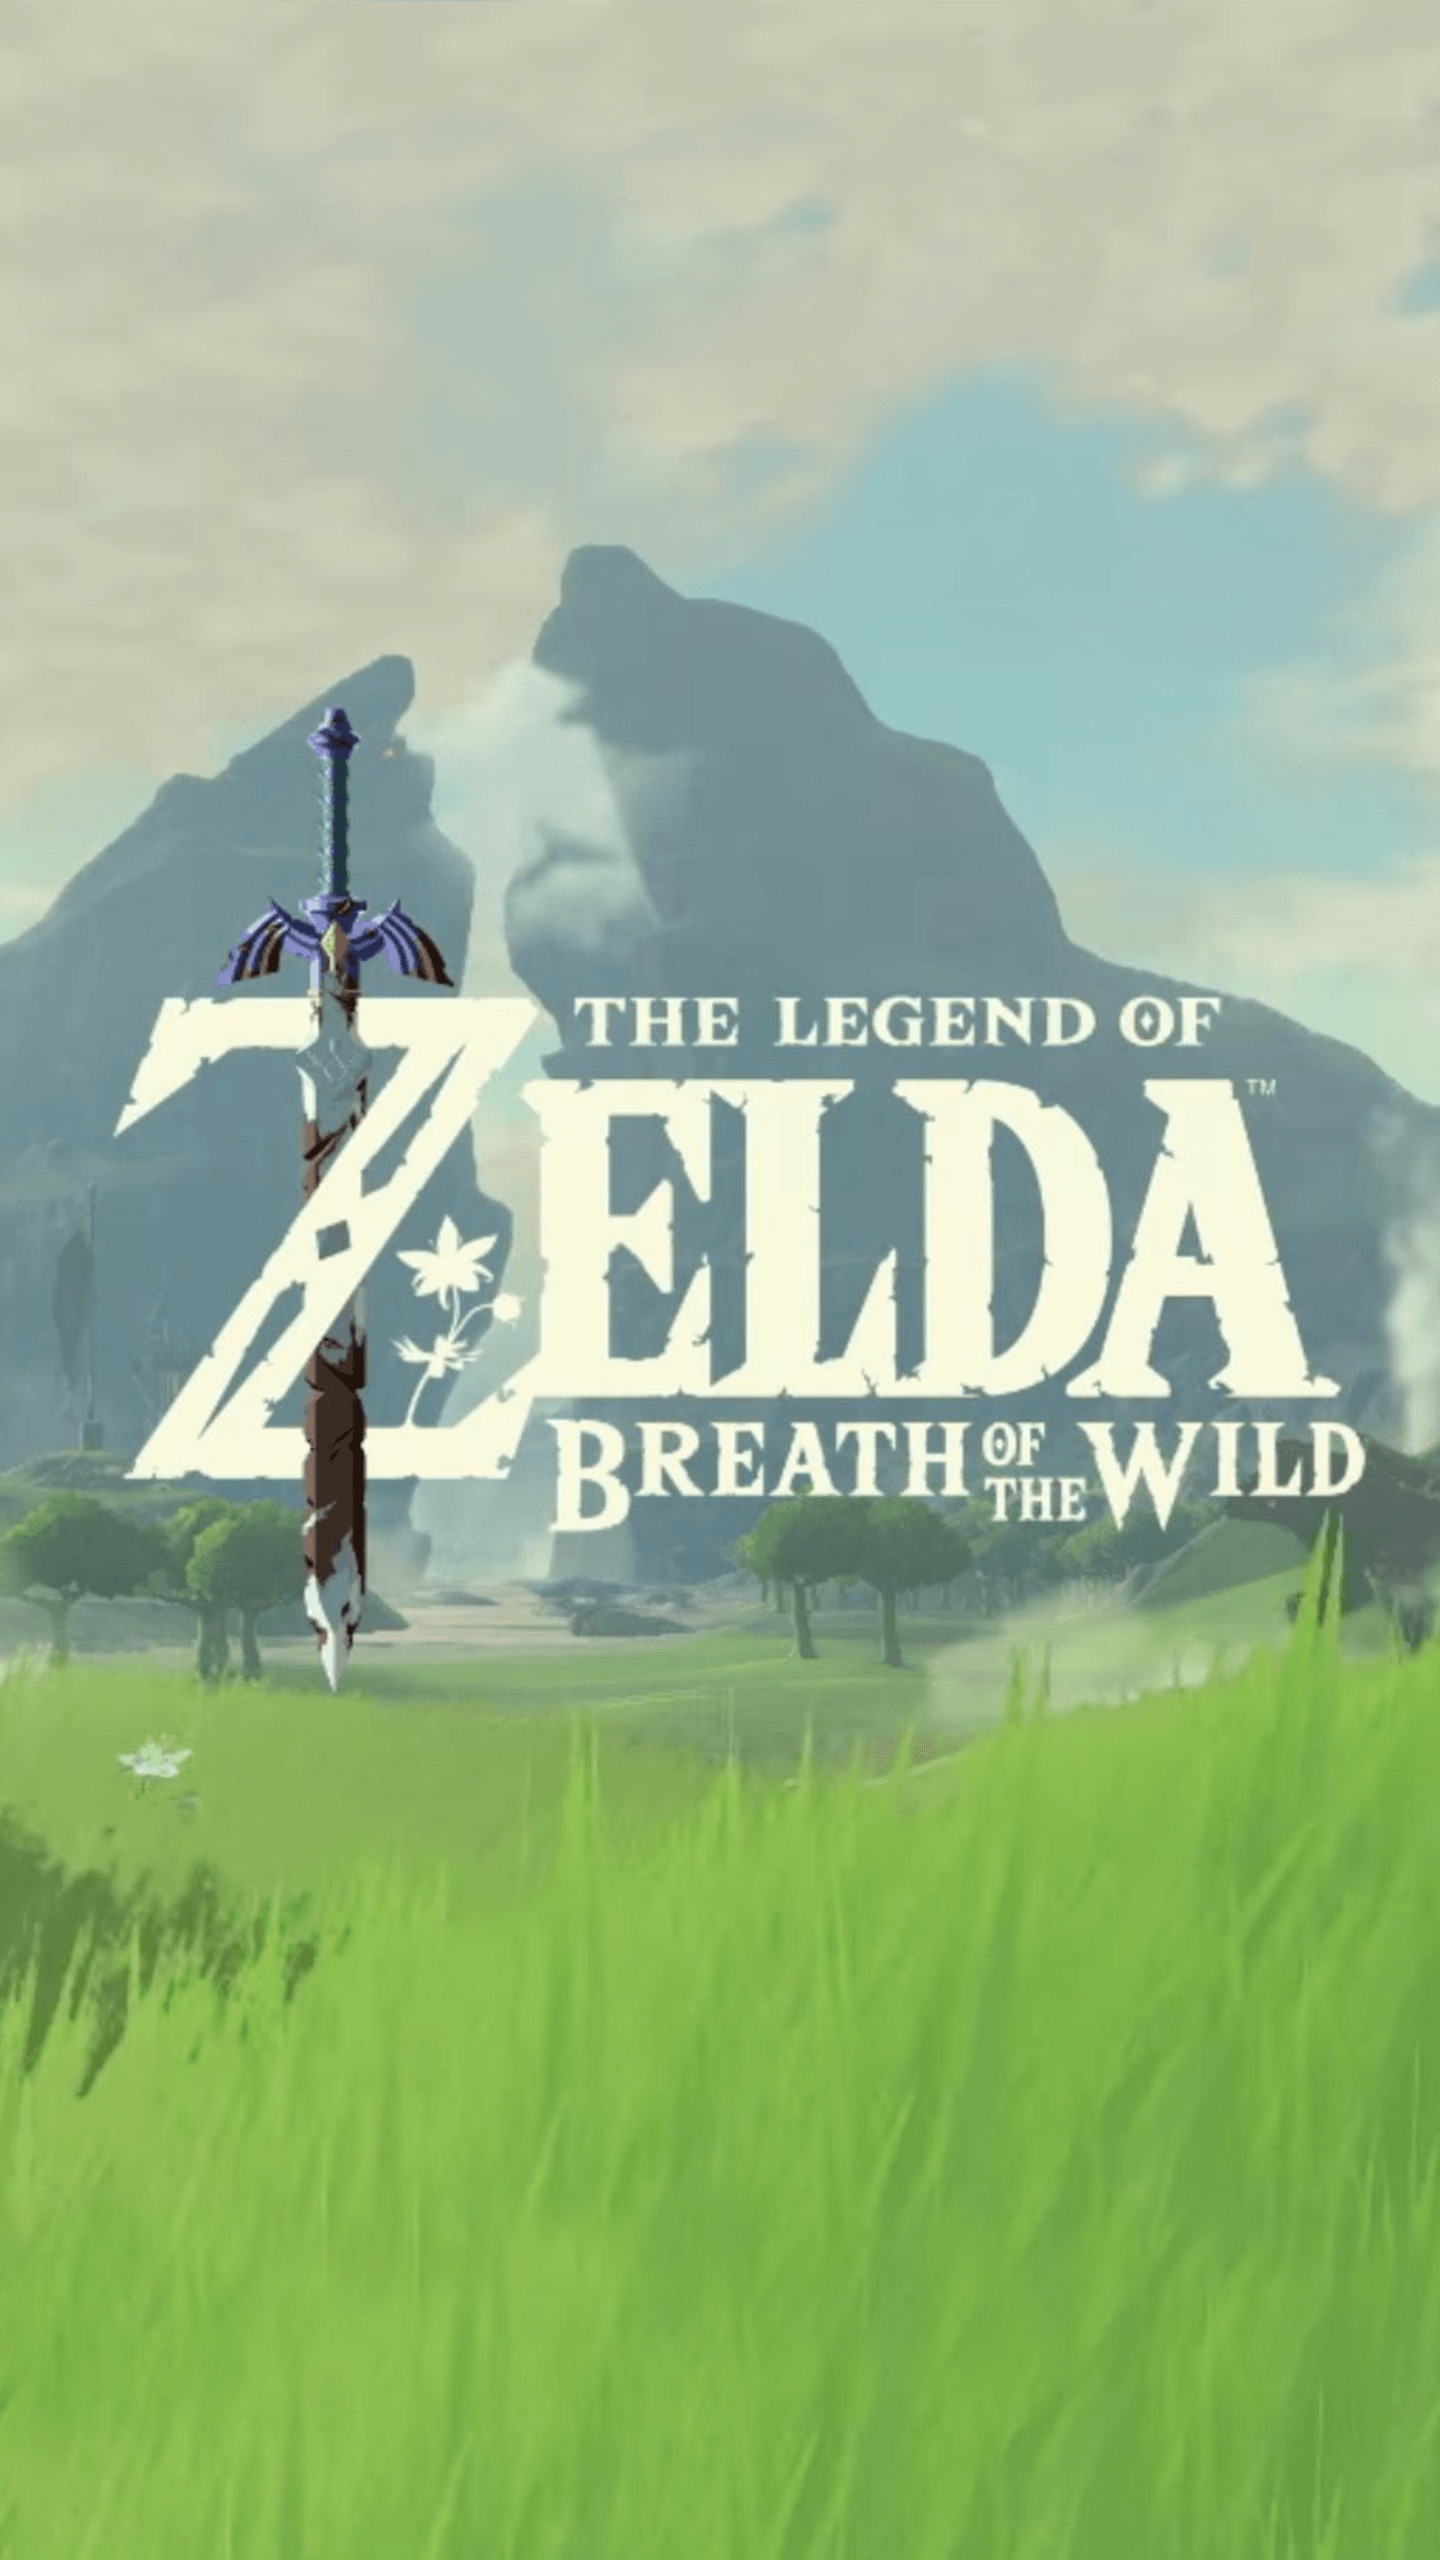 Zelda breath of the wild. Breath of the wild, Legend